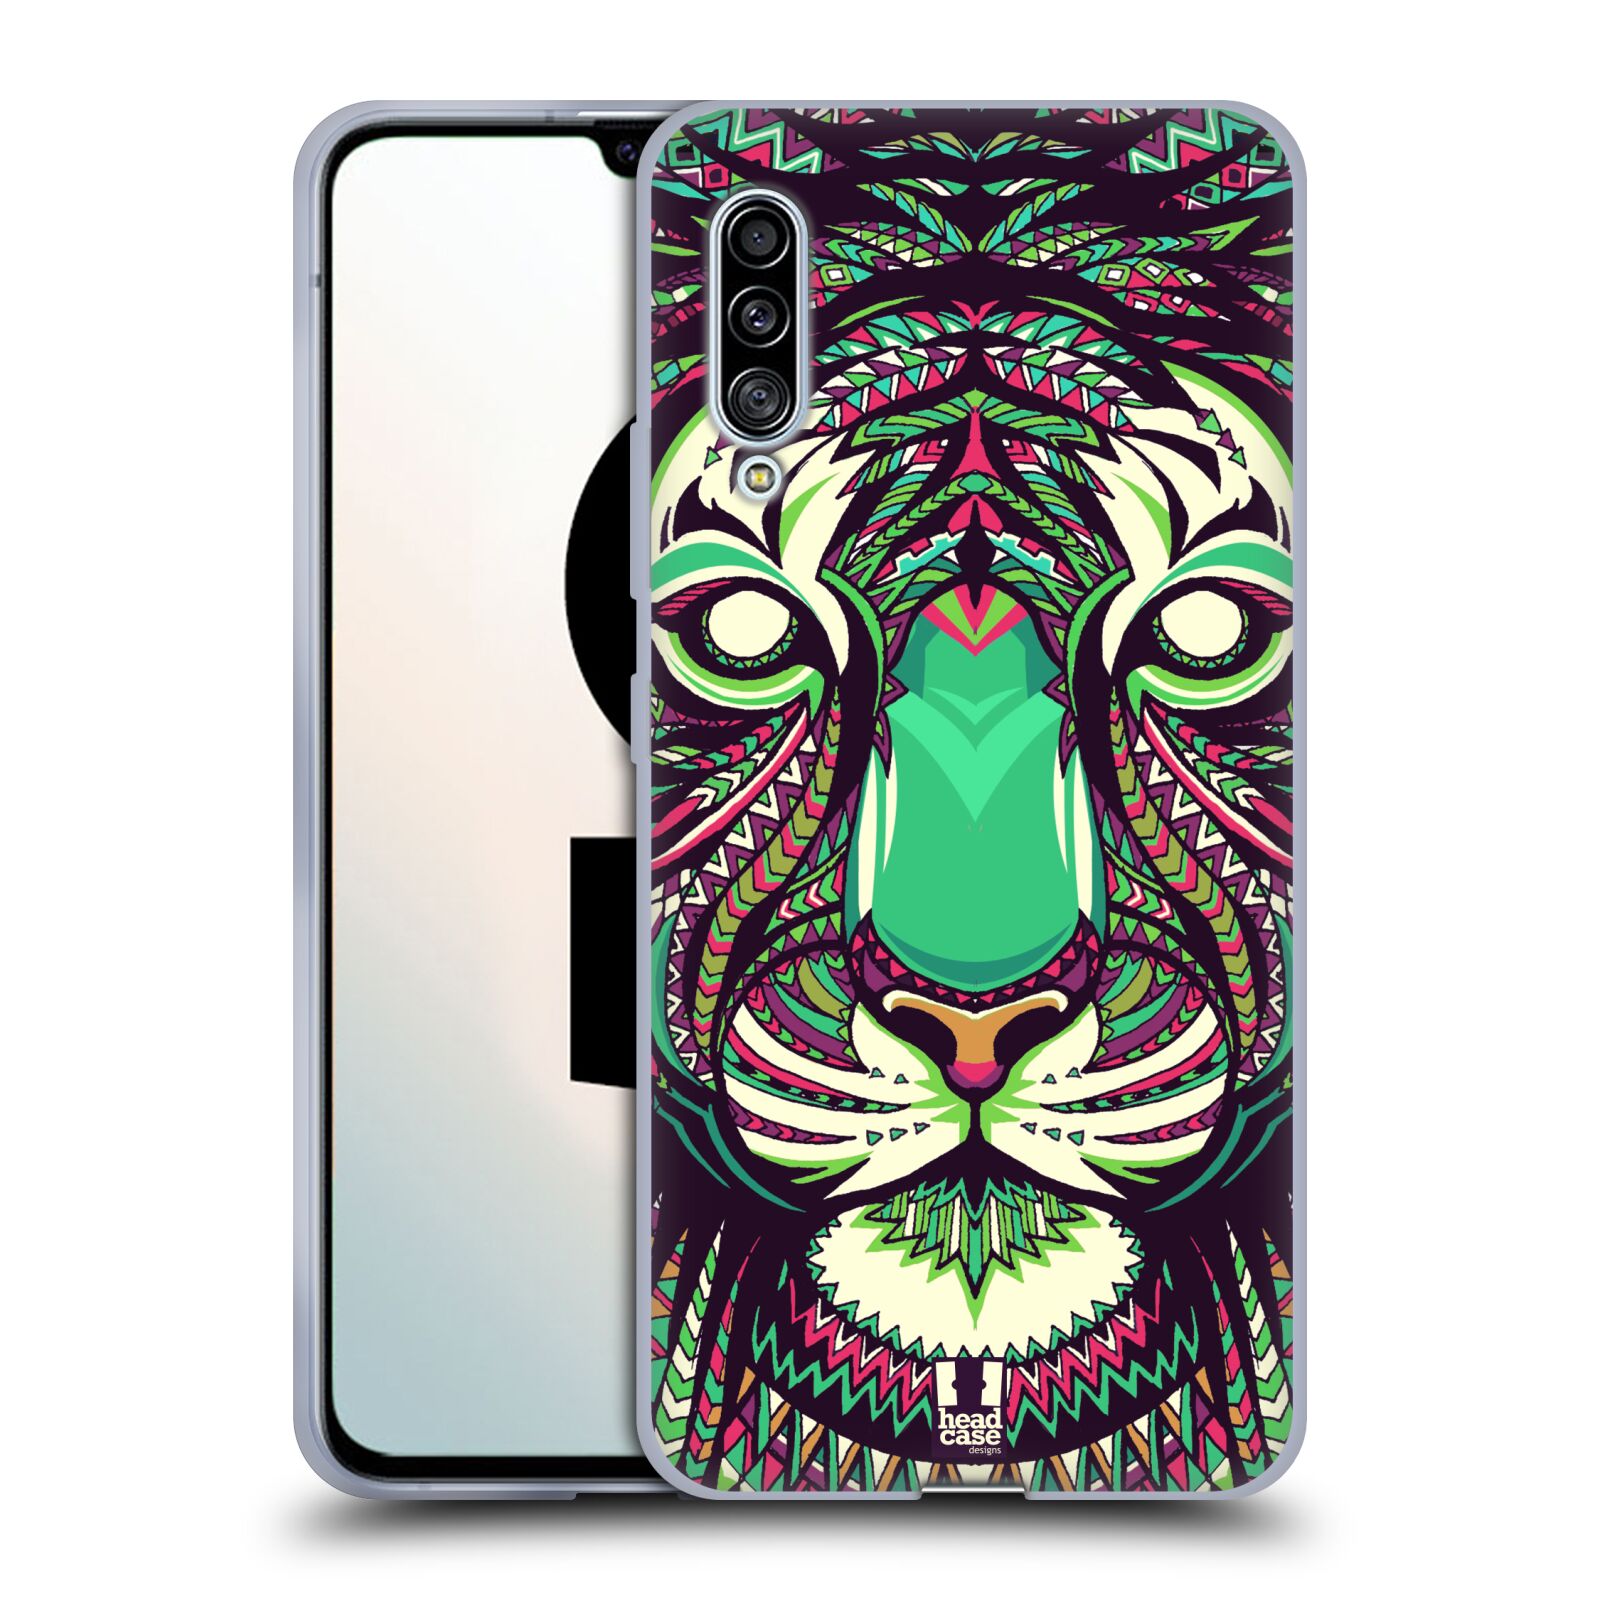 Plastový obal HEAD CASE na mobil Samsung Galaxy A90 5G vzor Aztécký motiv zvíře 2 tygr